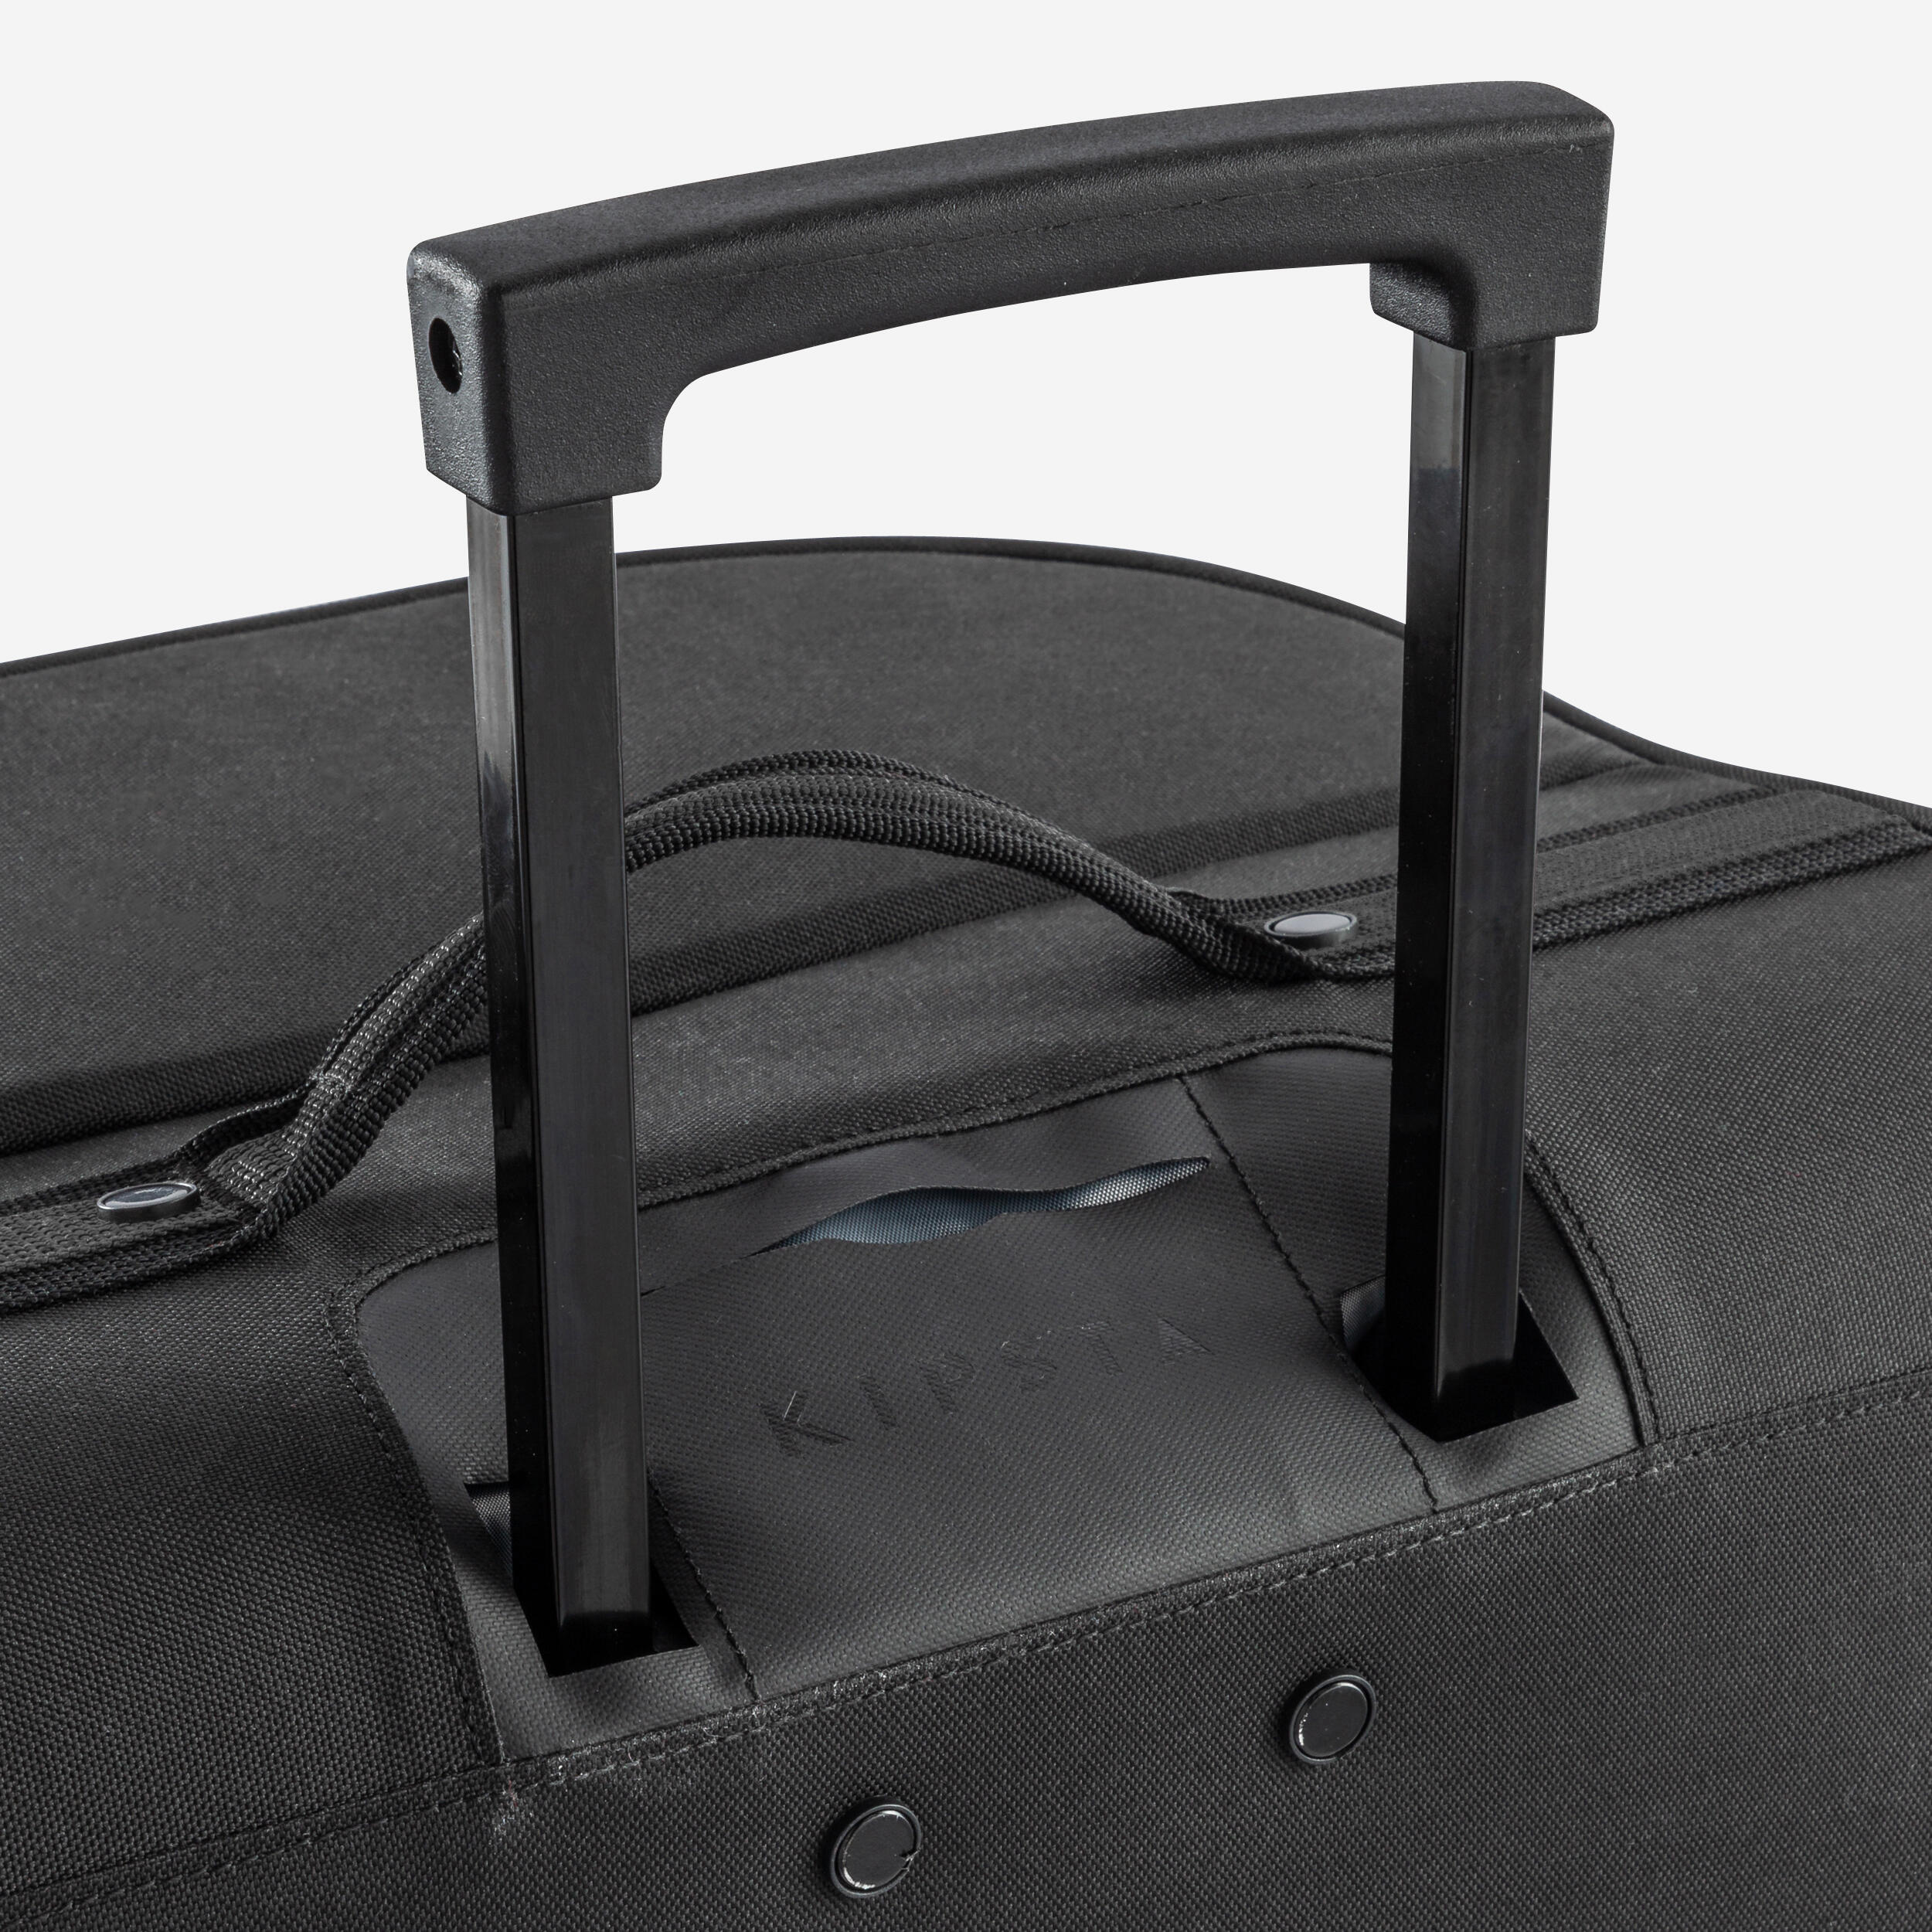 70 L Suitcase - Essential Black/Grey - Black, Black - Kipsta - Decathlon